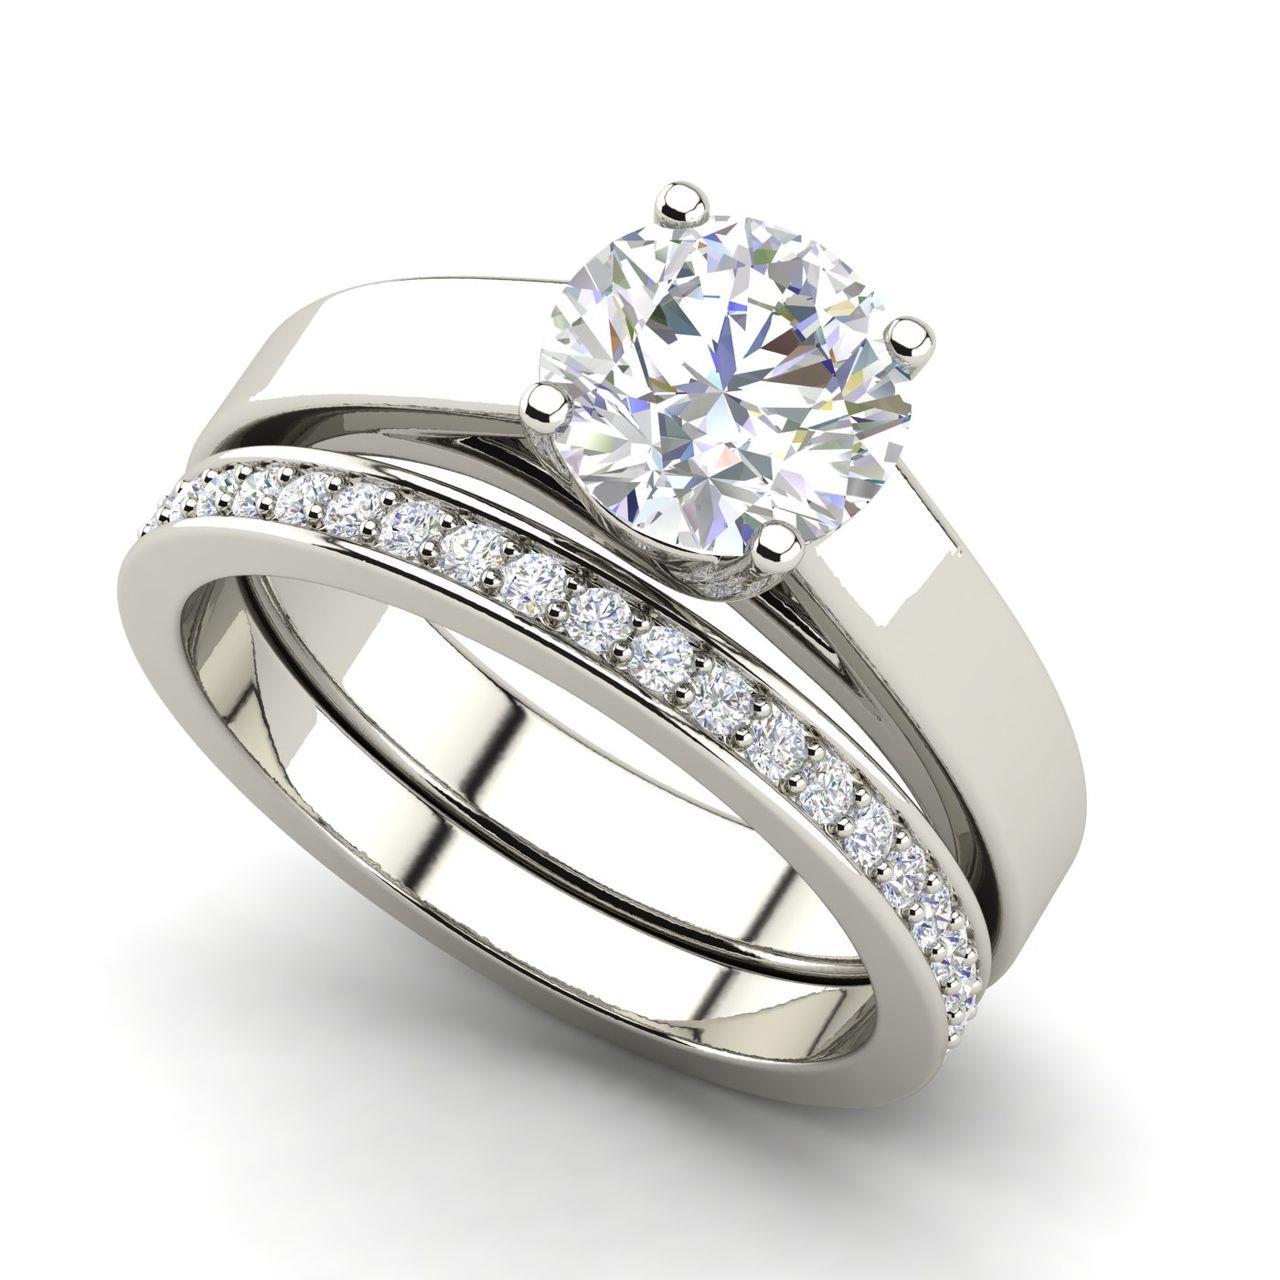 Channel Set 1.25 Carat Round Cut Diamond Engagement Ring